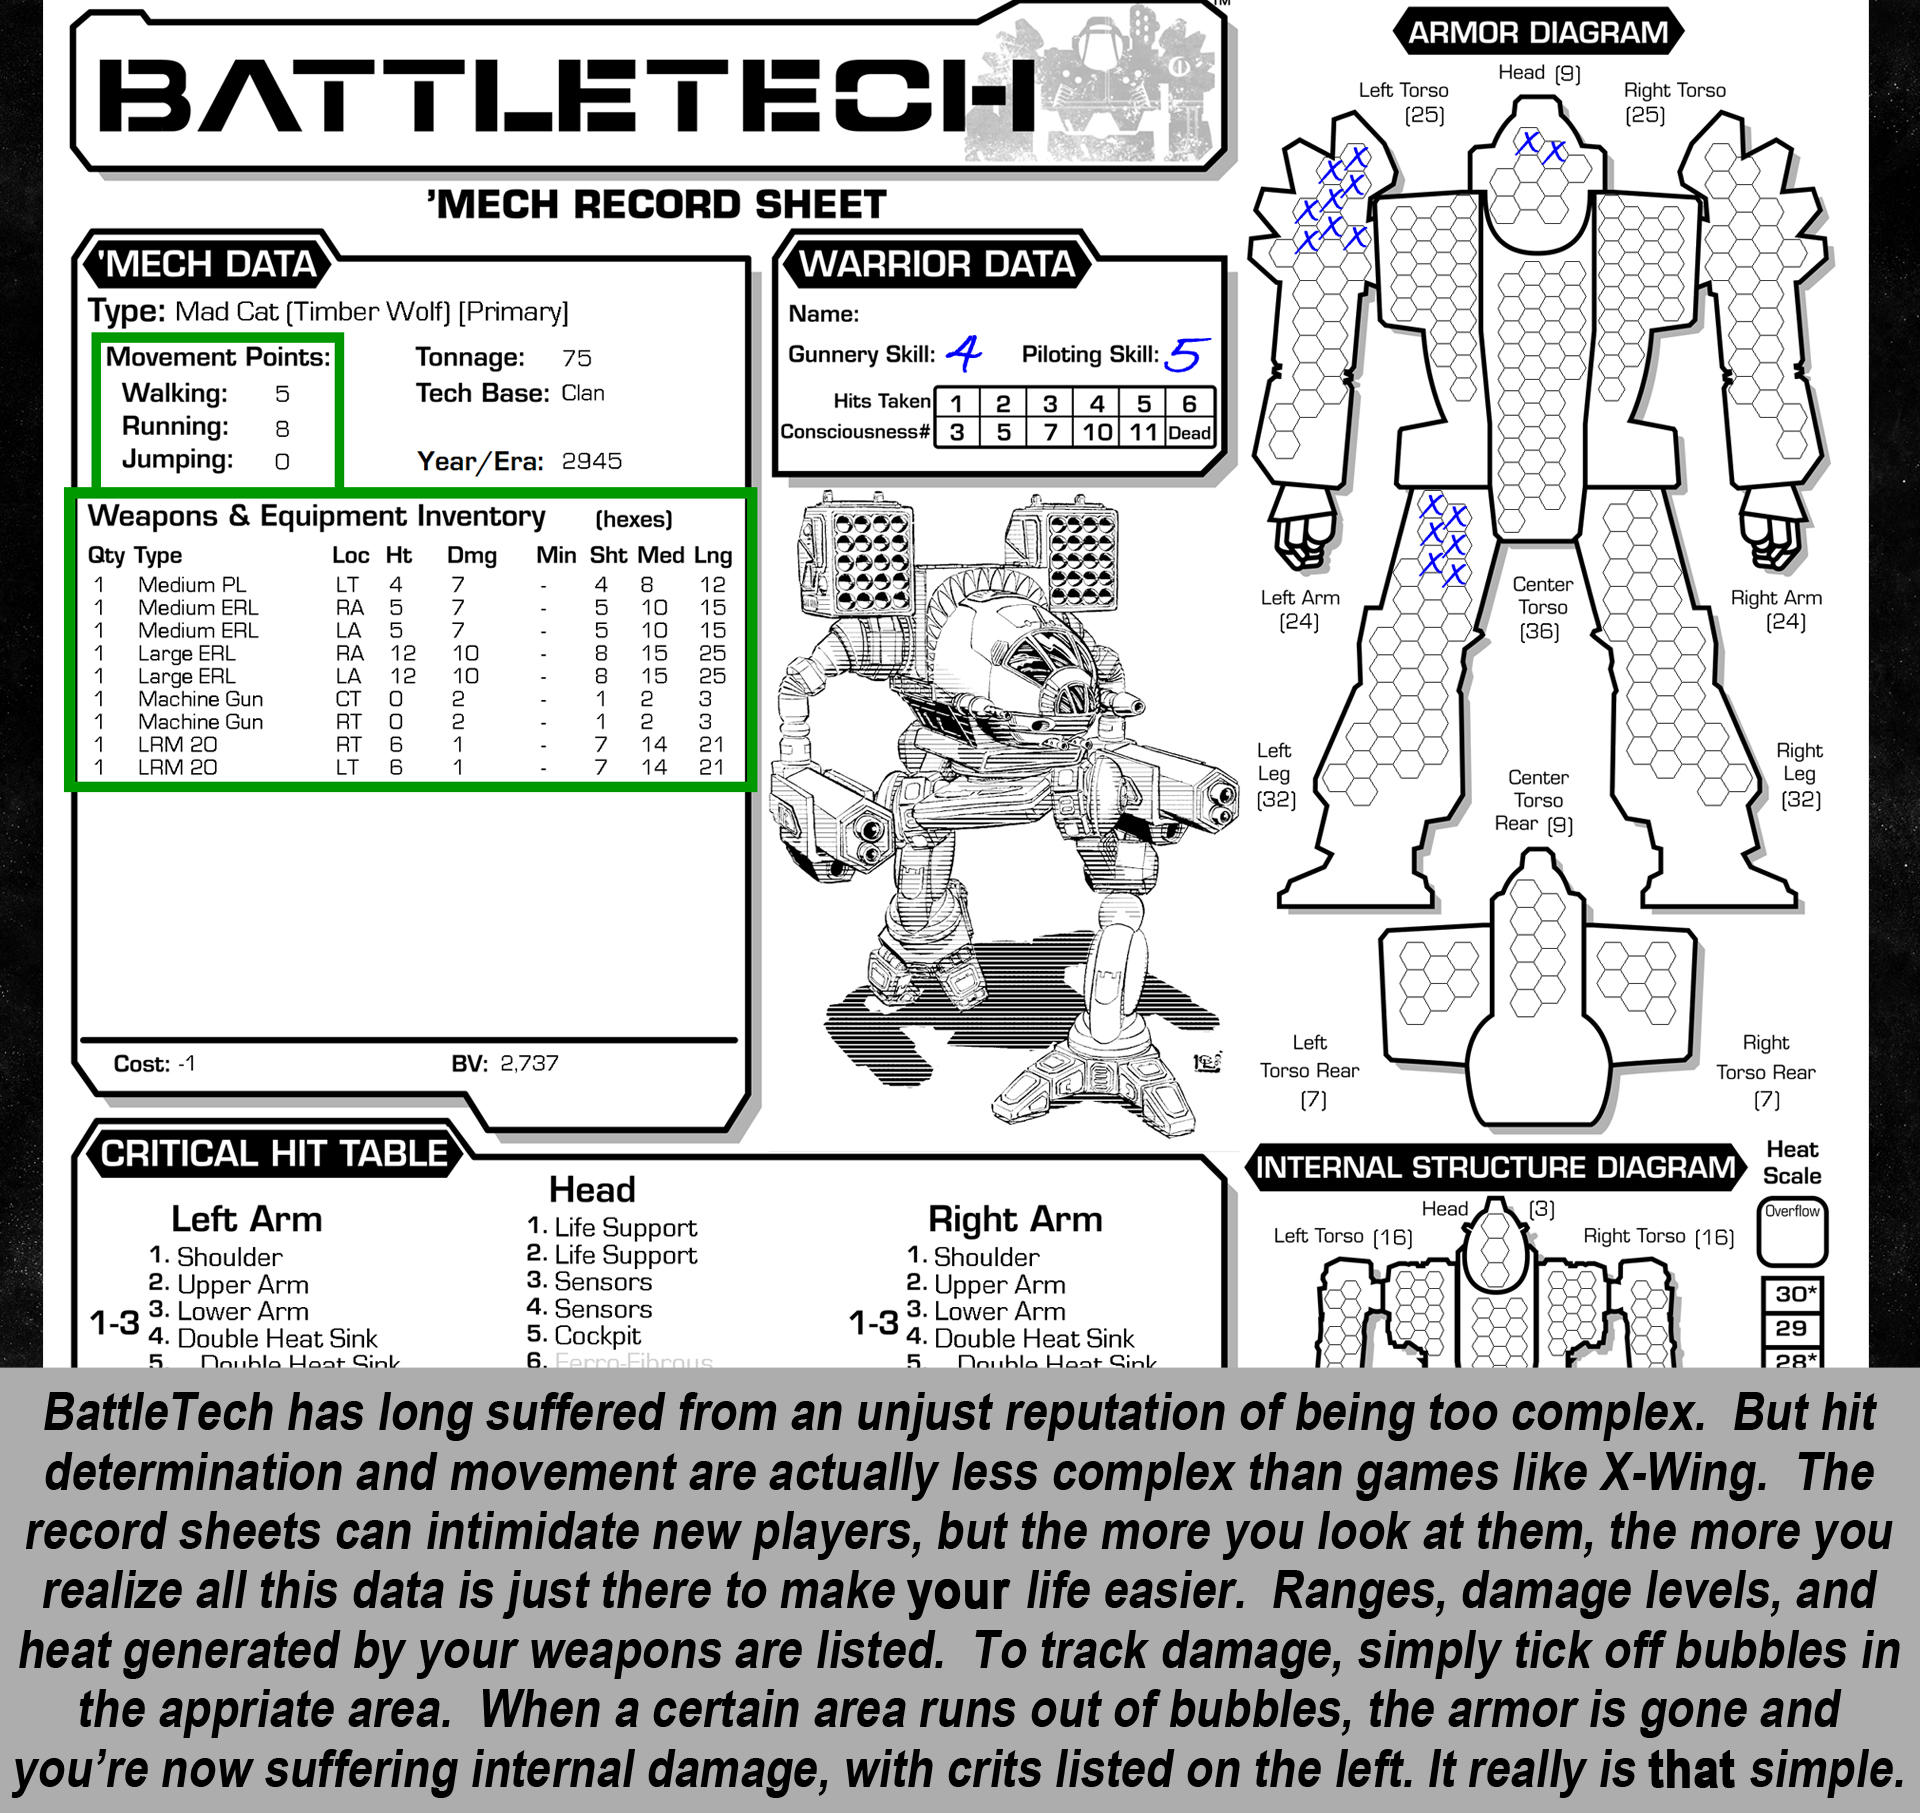 battletech record sheets a time of war